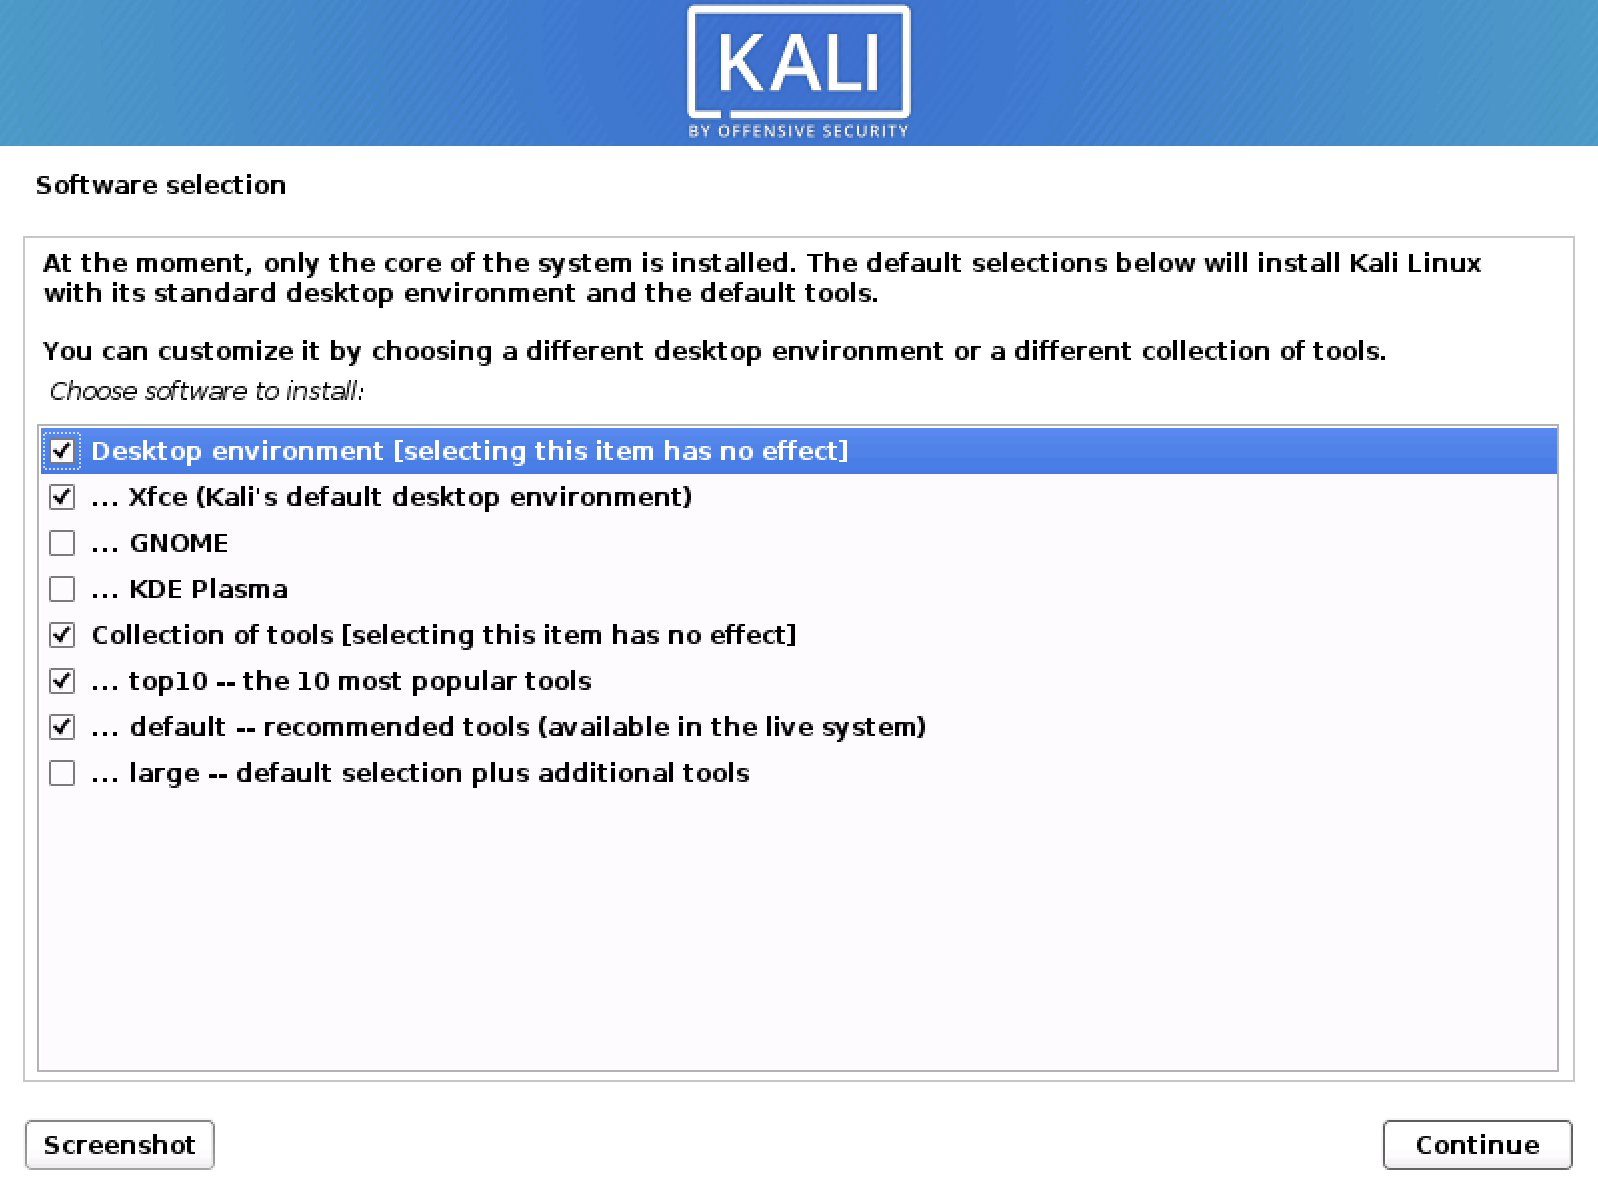 Kali Linux software and DE selection